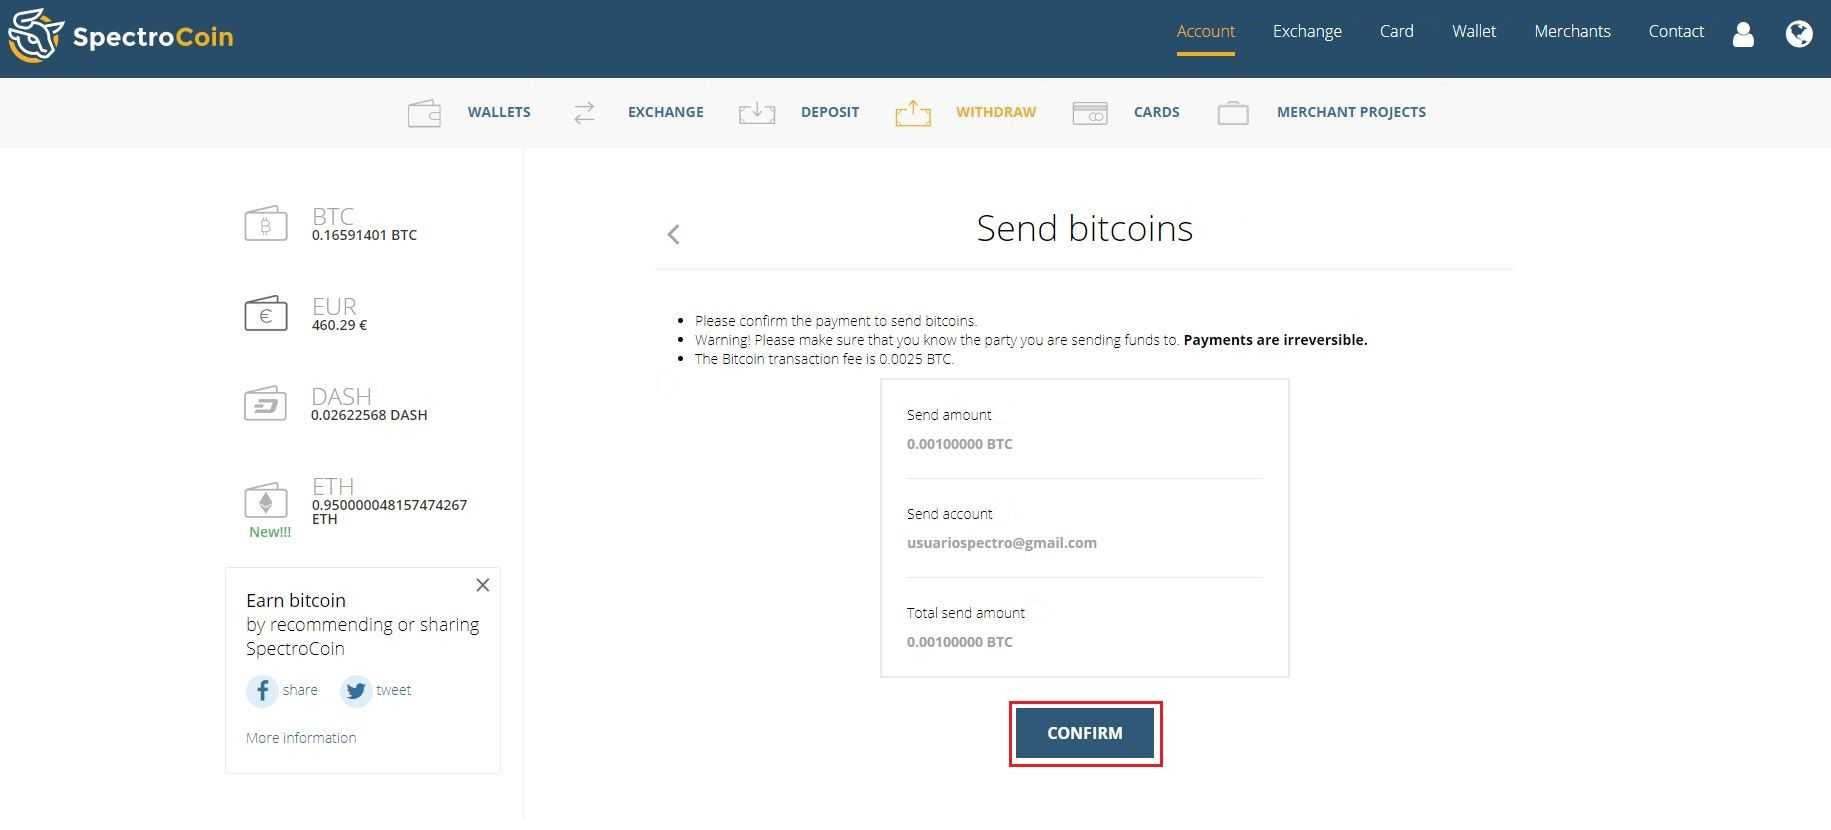 SpectroCoin "send bitcoins" window